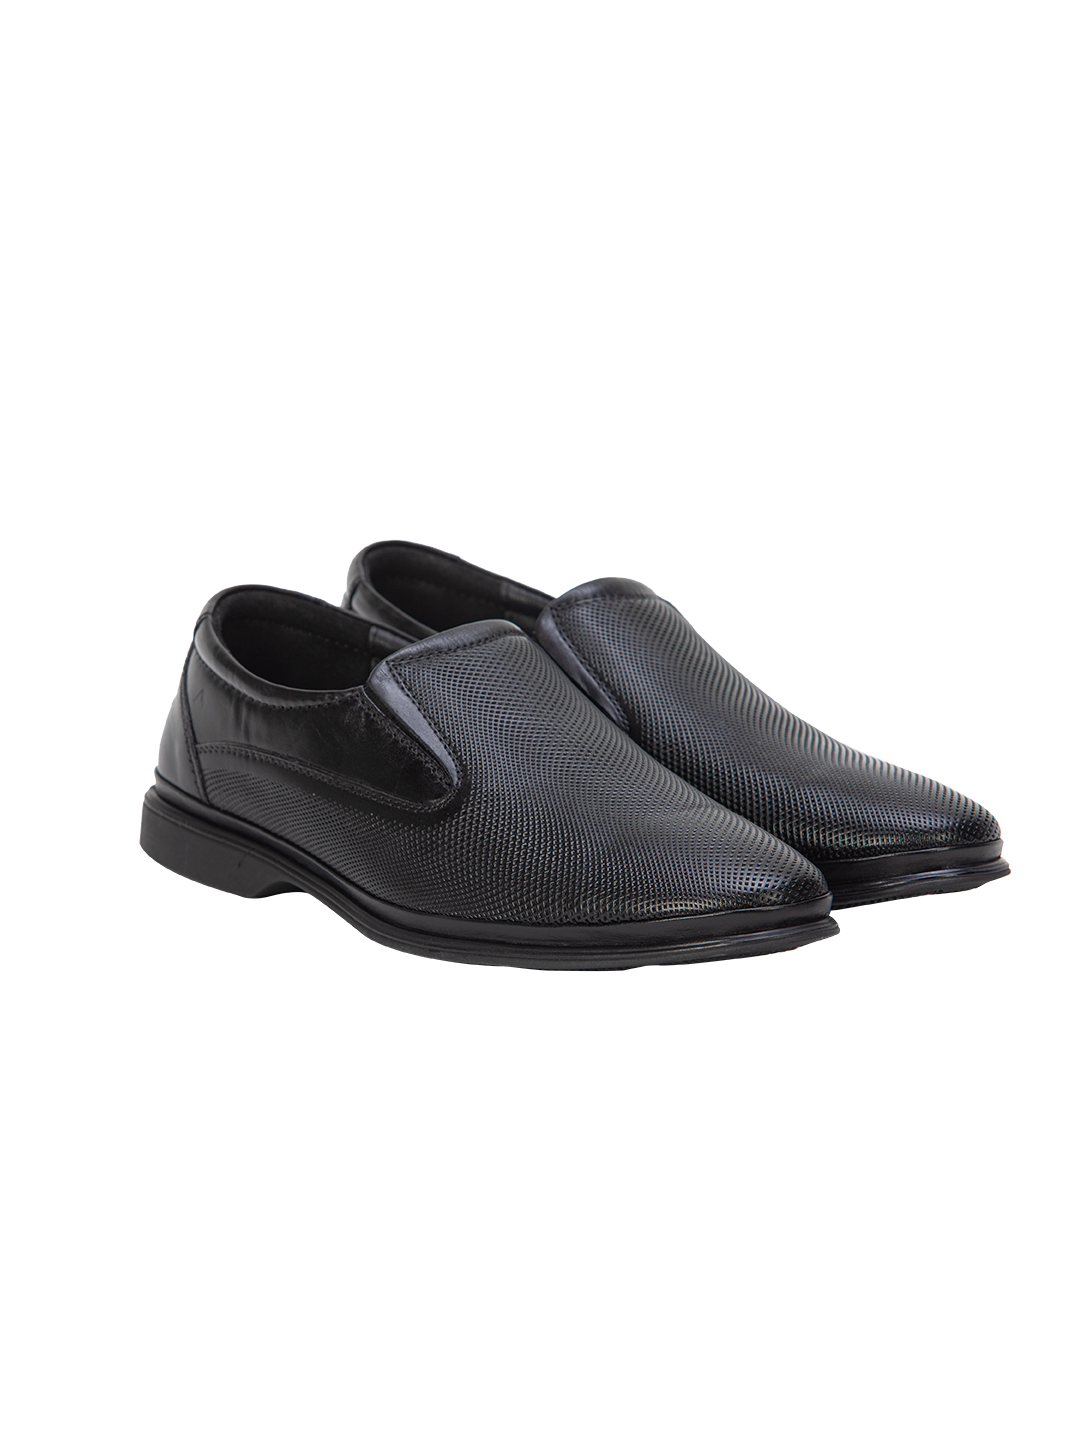 Buy Von Wellx Germany Comfort Mondaine Casual Black Shoes Online in Gujarat